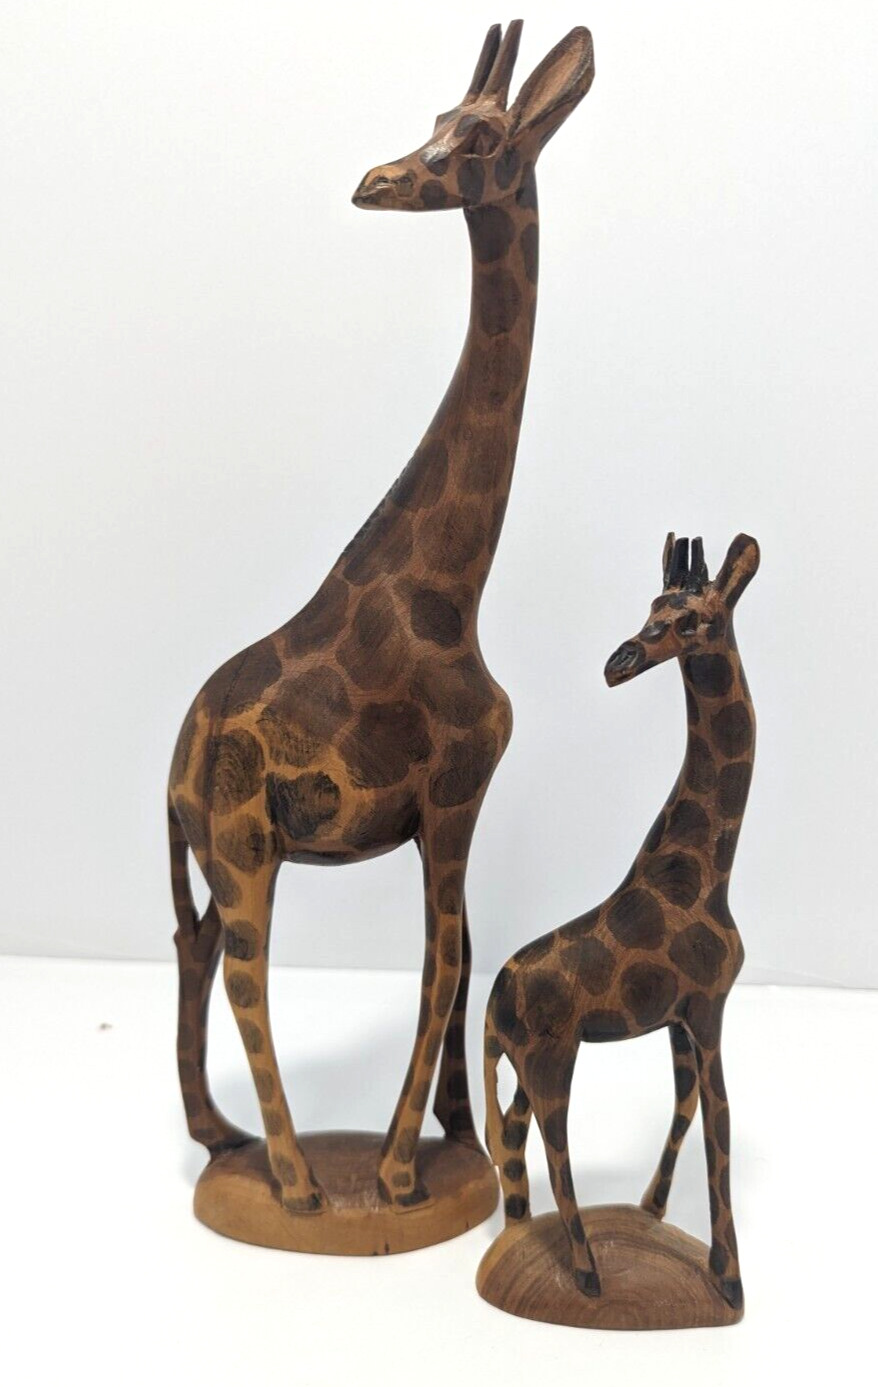 HANDMADE Vintage Lot of 2 Wooden Hand Carved Giraffes Kenya Africa Mother Baby